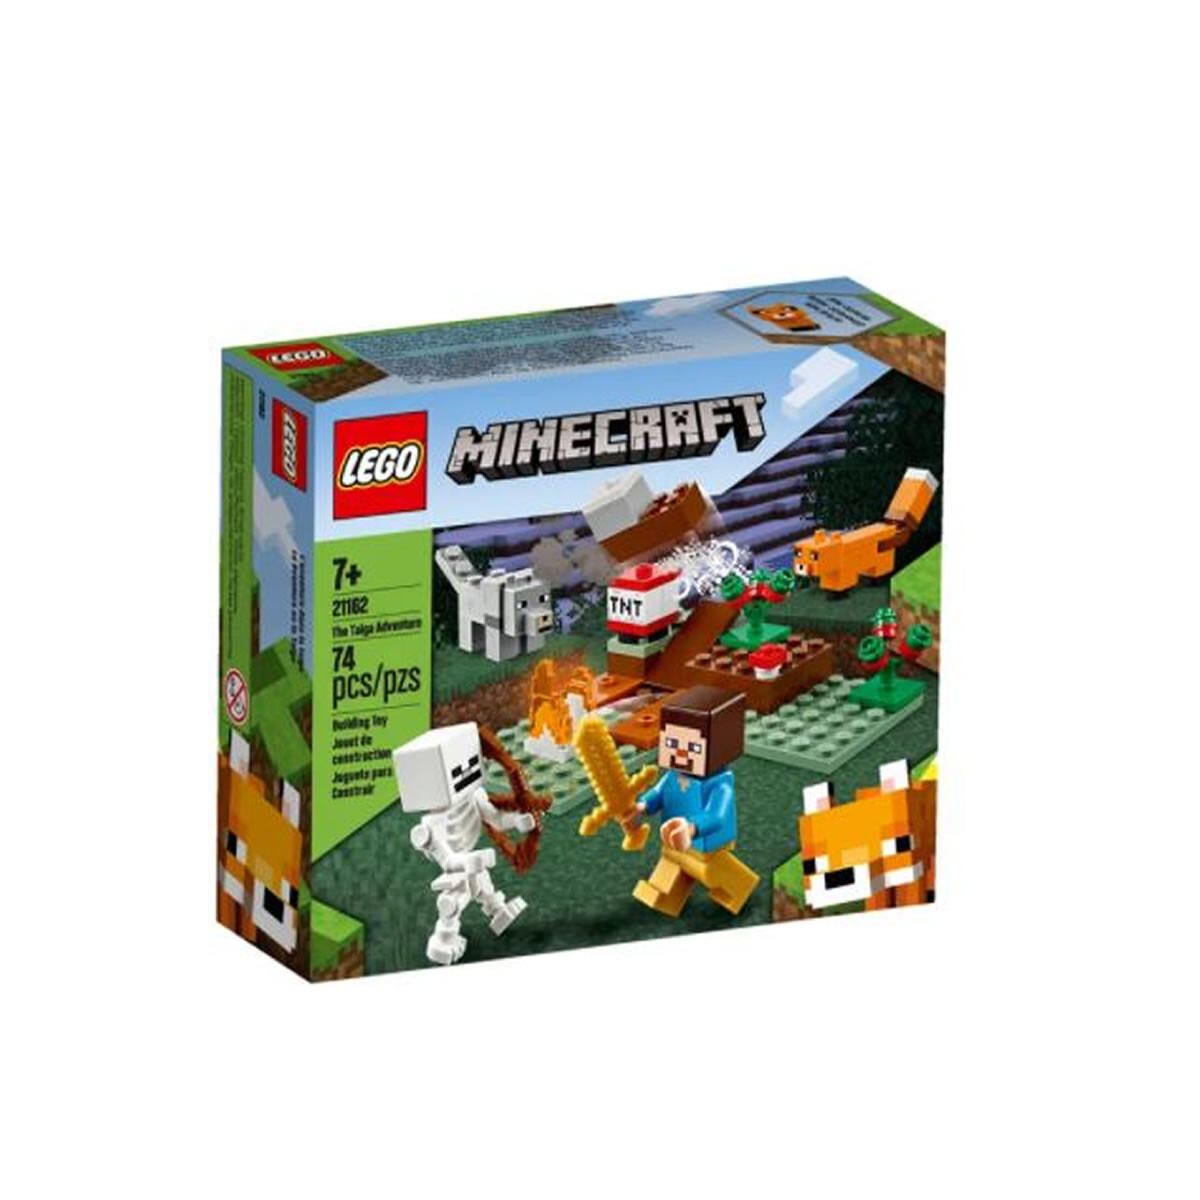 LEGO MINECRAFT Aventuras Taiga 74 Pzs 